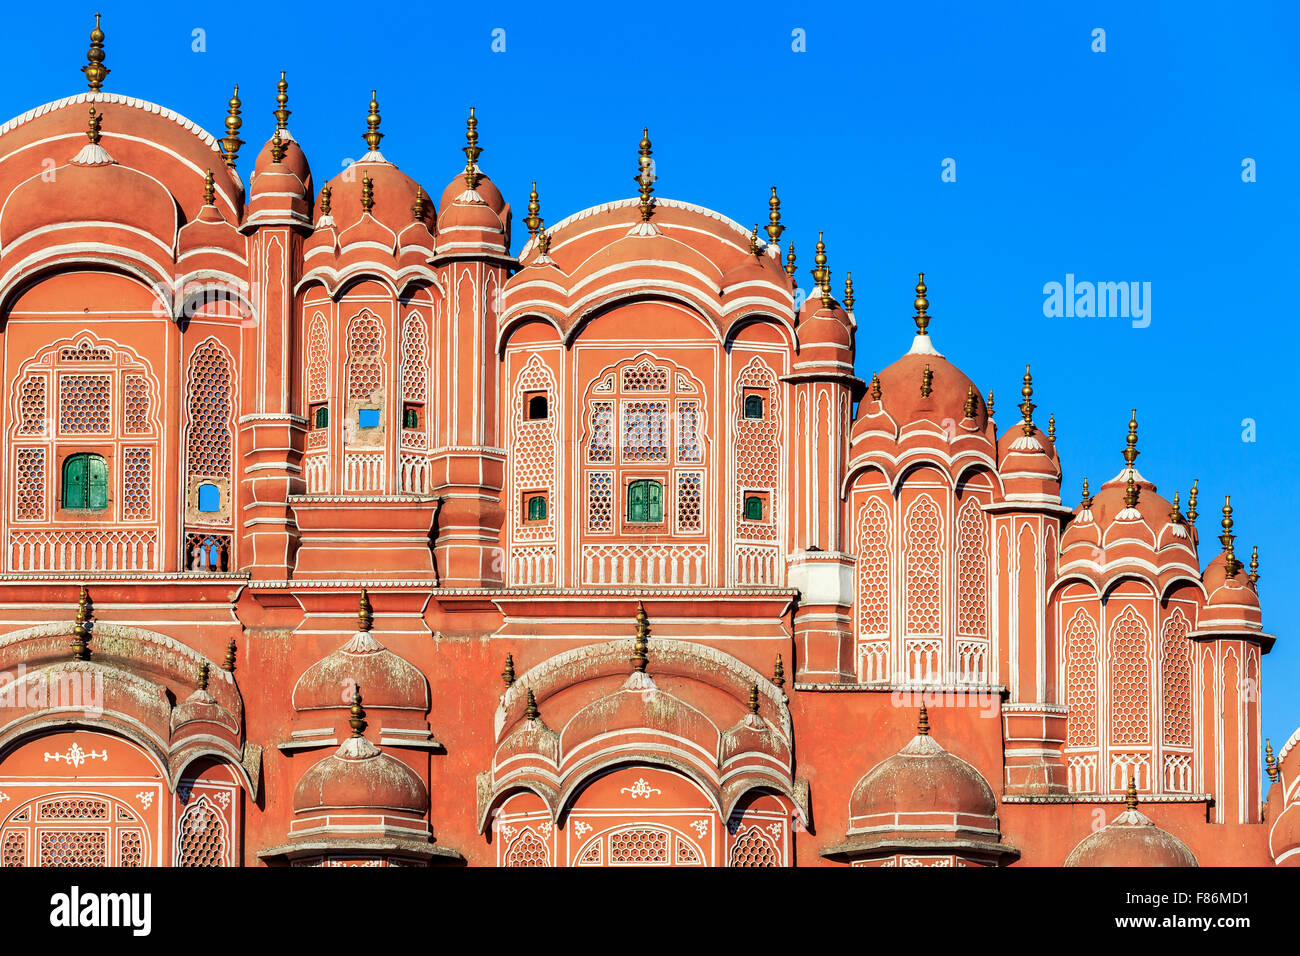 Facade of the Hawa Mahal, Palace of the Winds, Jaipur, Rajasthan, India Stock Photo